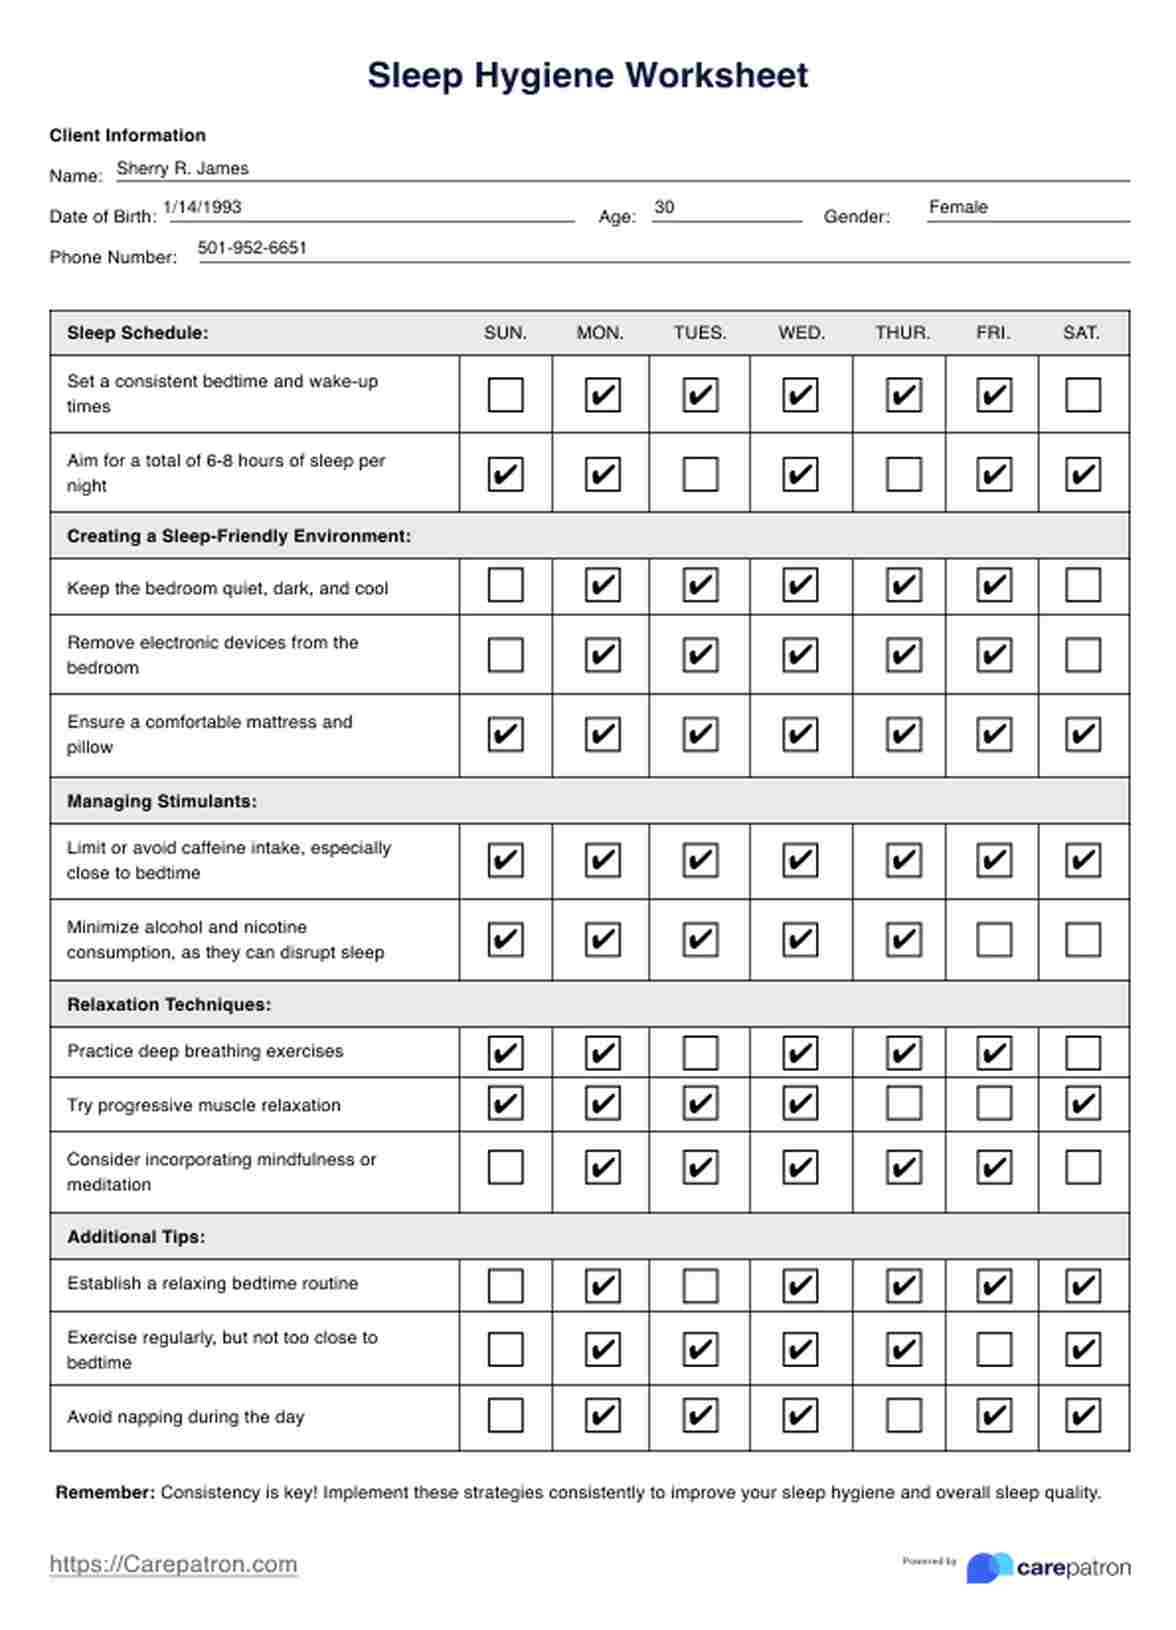 Sleep Hygiene Checklist PDF Example